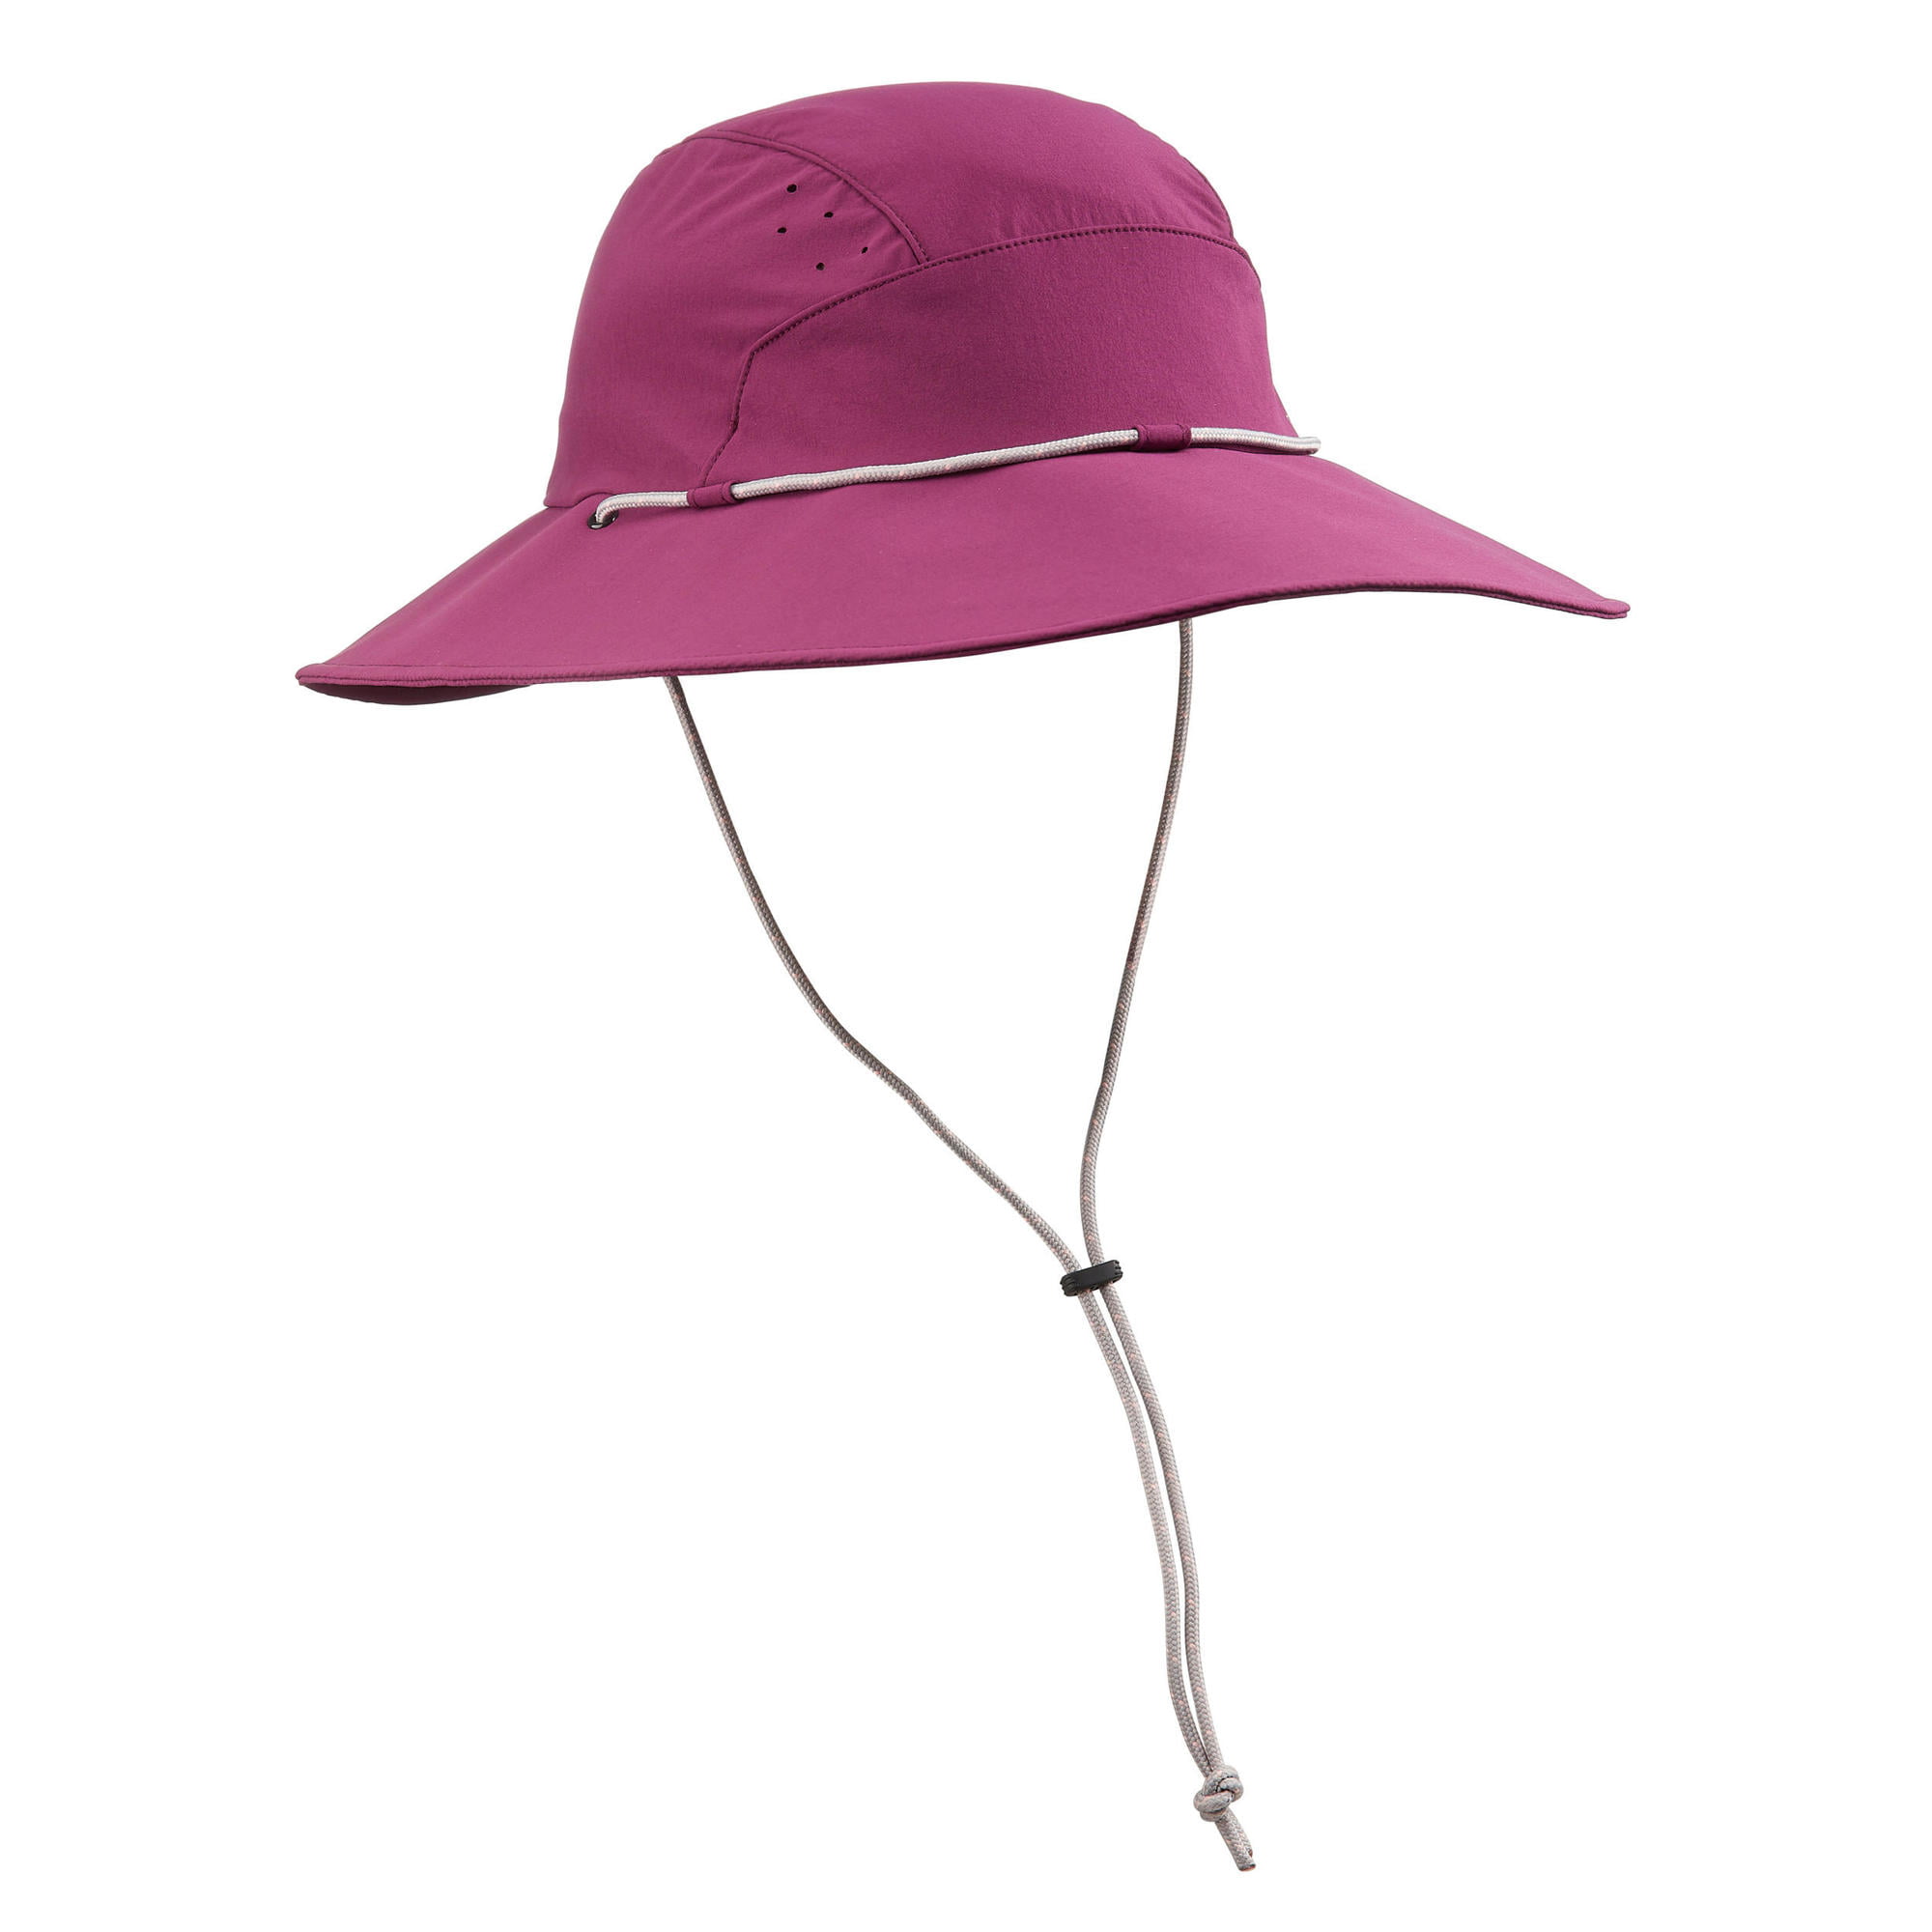 Ruddy Begge indeks Decathlon Forclaz Trek500, Anti-UV Hiking Hat, Women's - Walmart.com